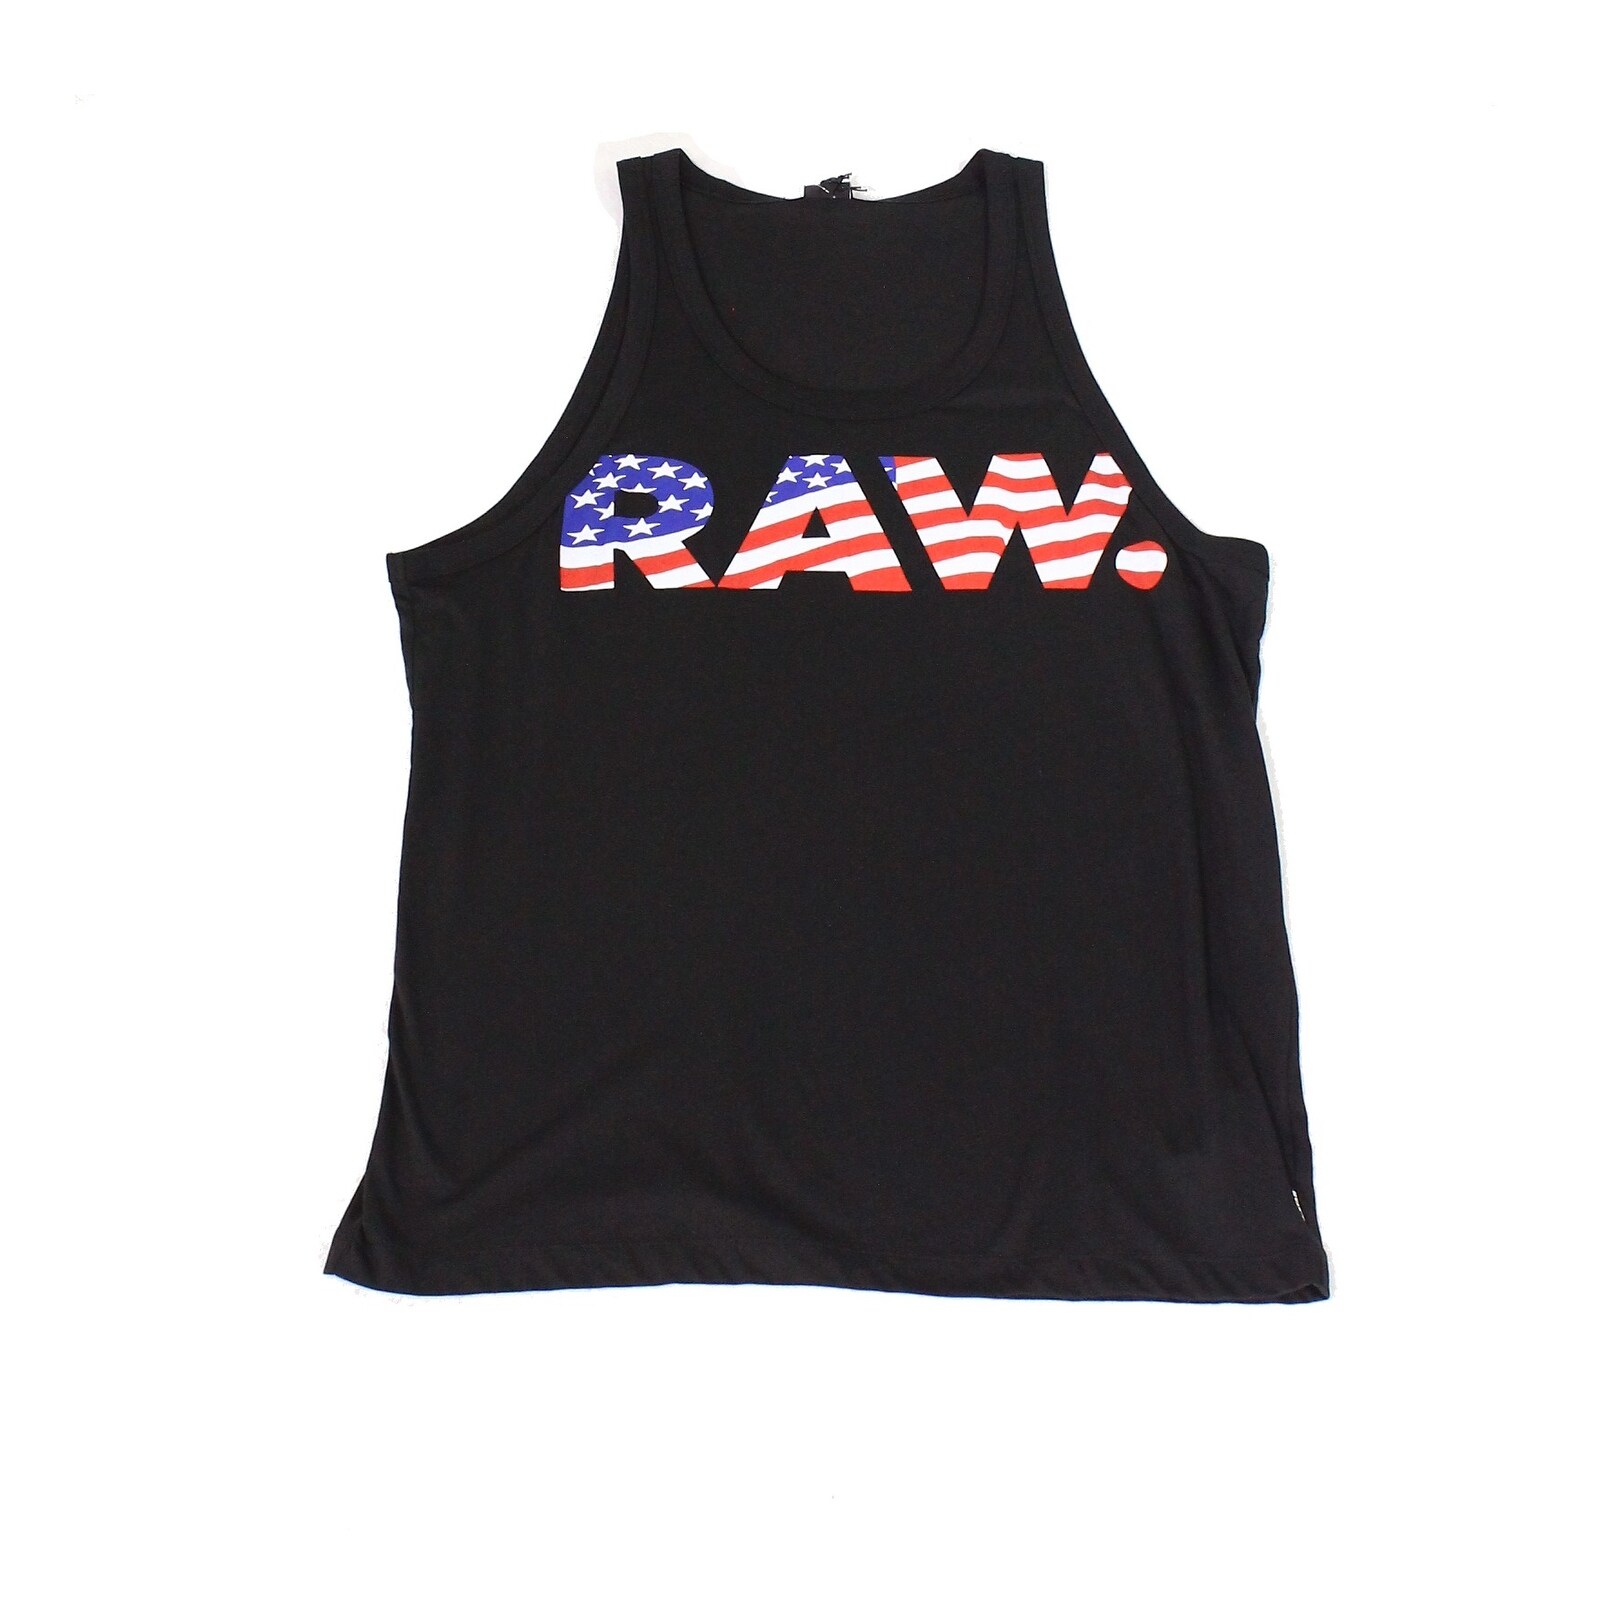 g star raw men's tank top